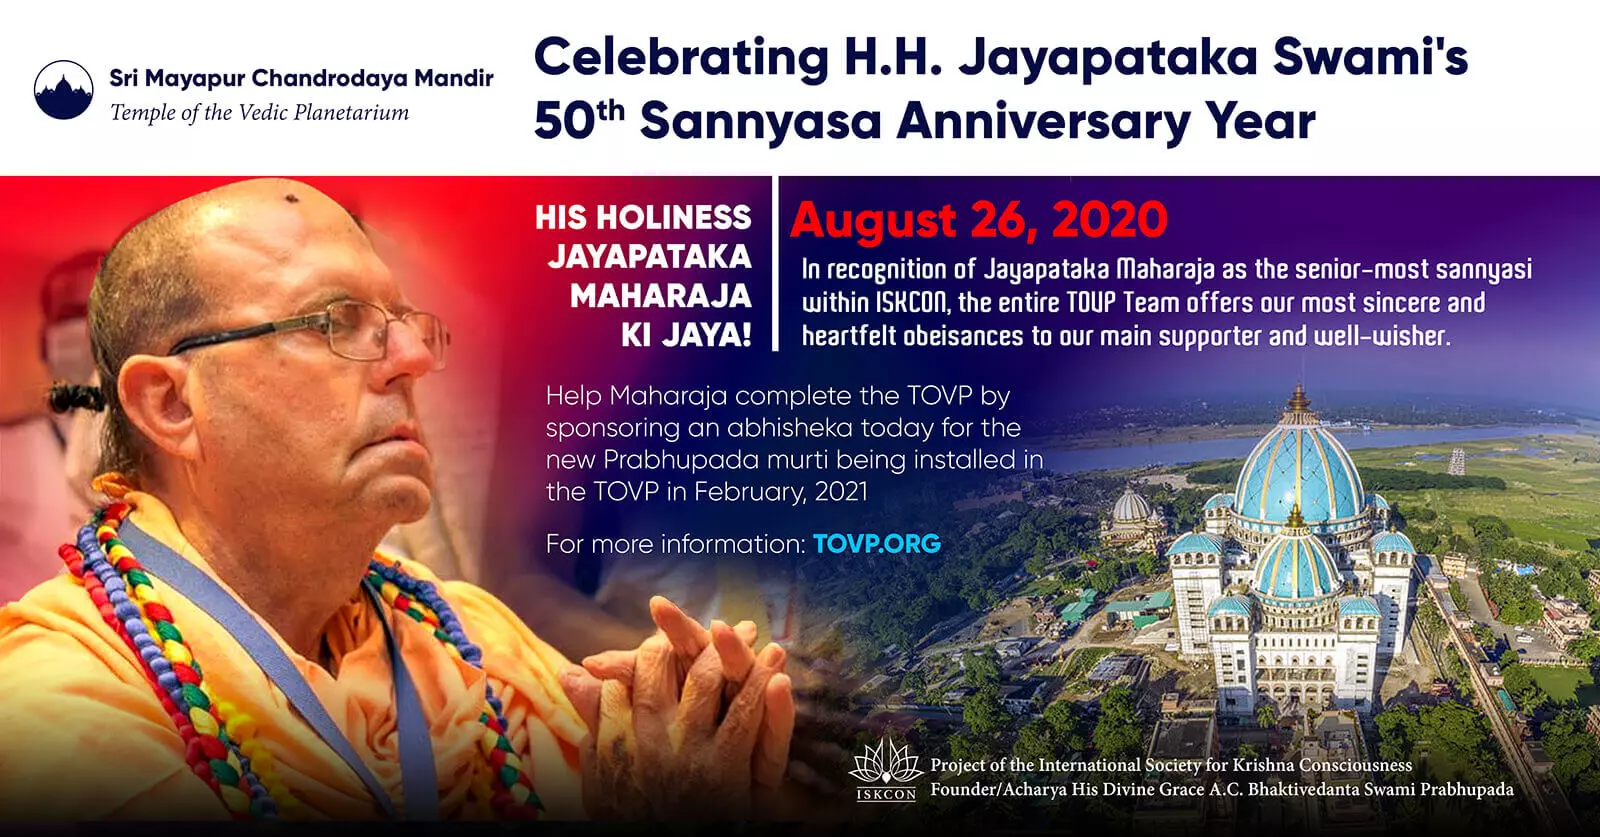 Jayapataka Swami's 50th Sannyasa Anniversary